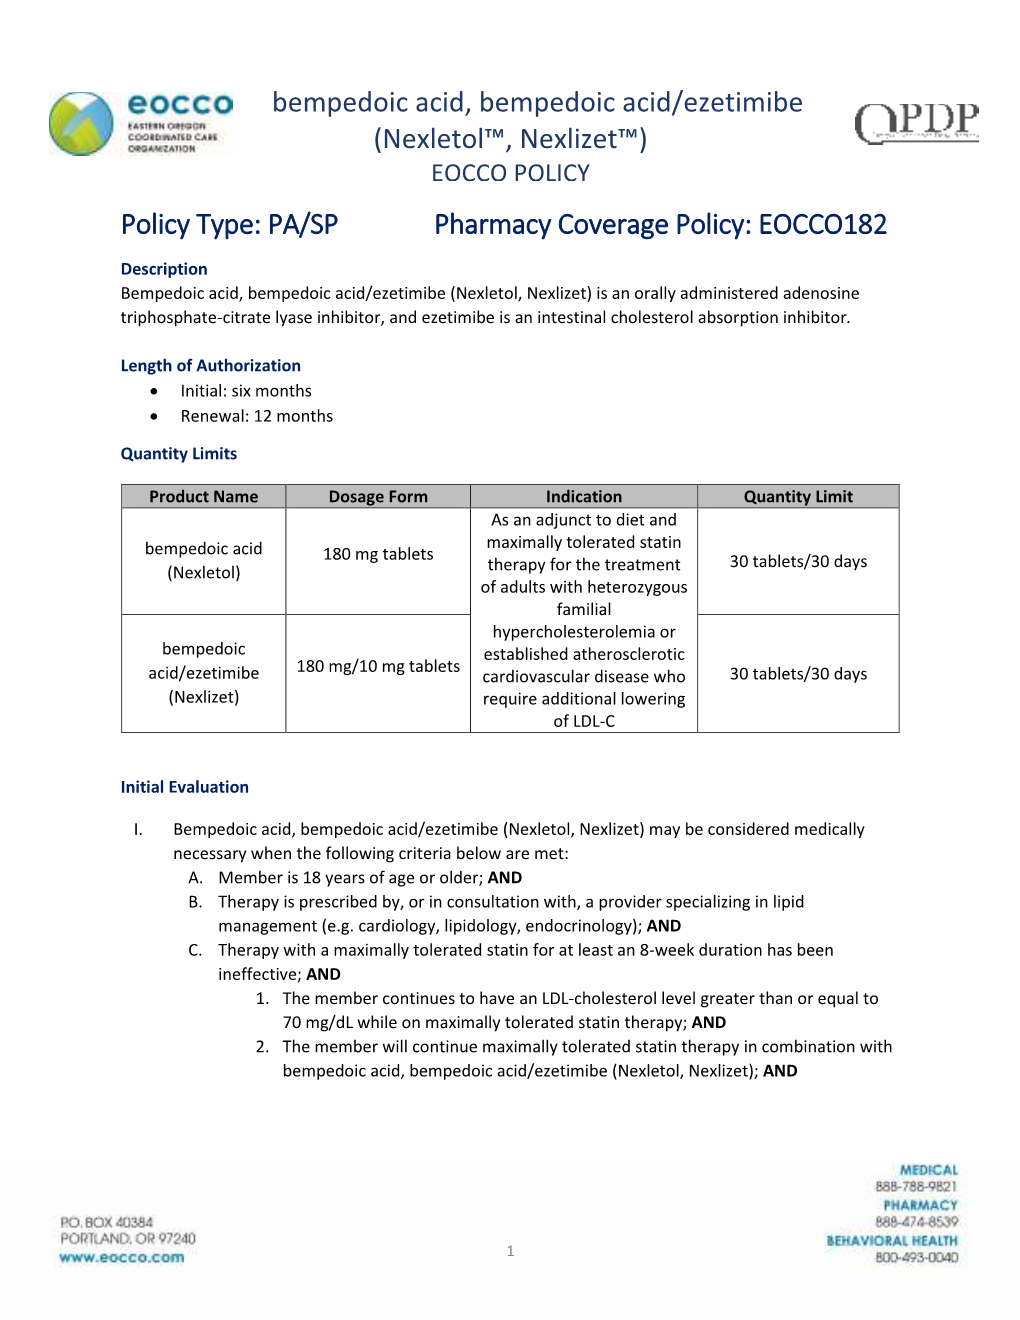 Bempedoic Acid, Bempedoic Acid/Ezetimibe (Nexletol™, Nexlizet™) EOCCO POLICY Policy Type: PA/SP Pharmacy Coverage Policy: EOCCO182